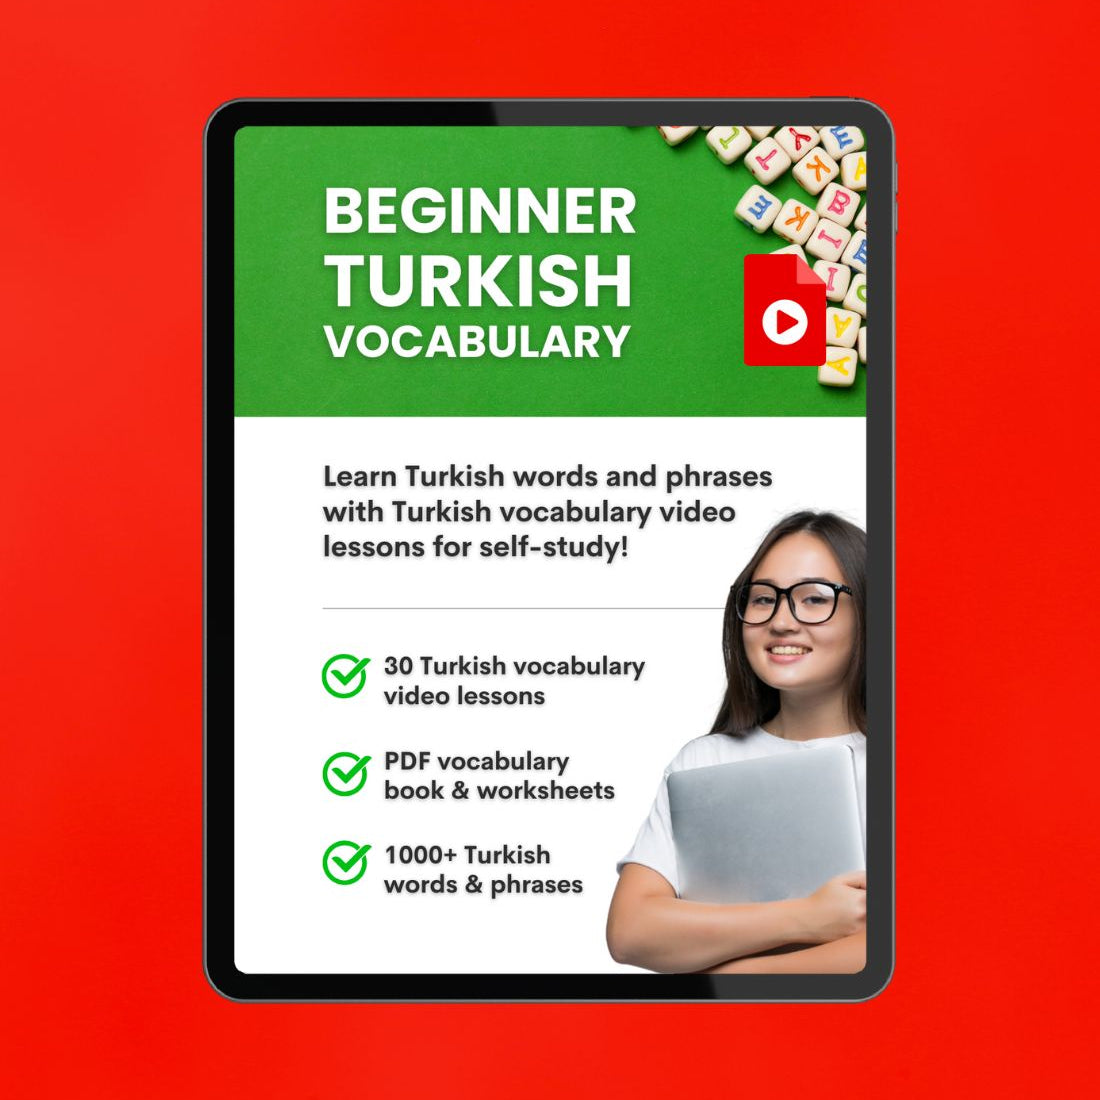 Beginner Turkish Vocabulary